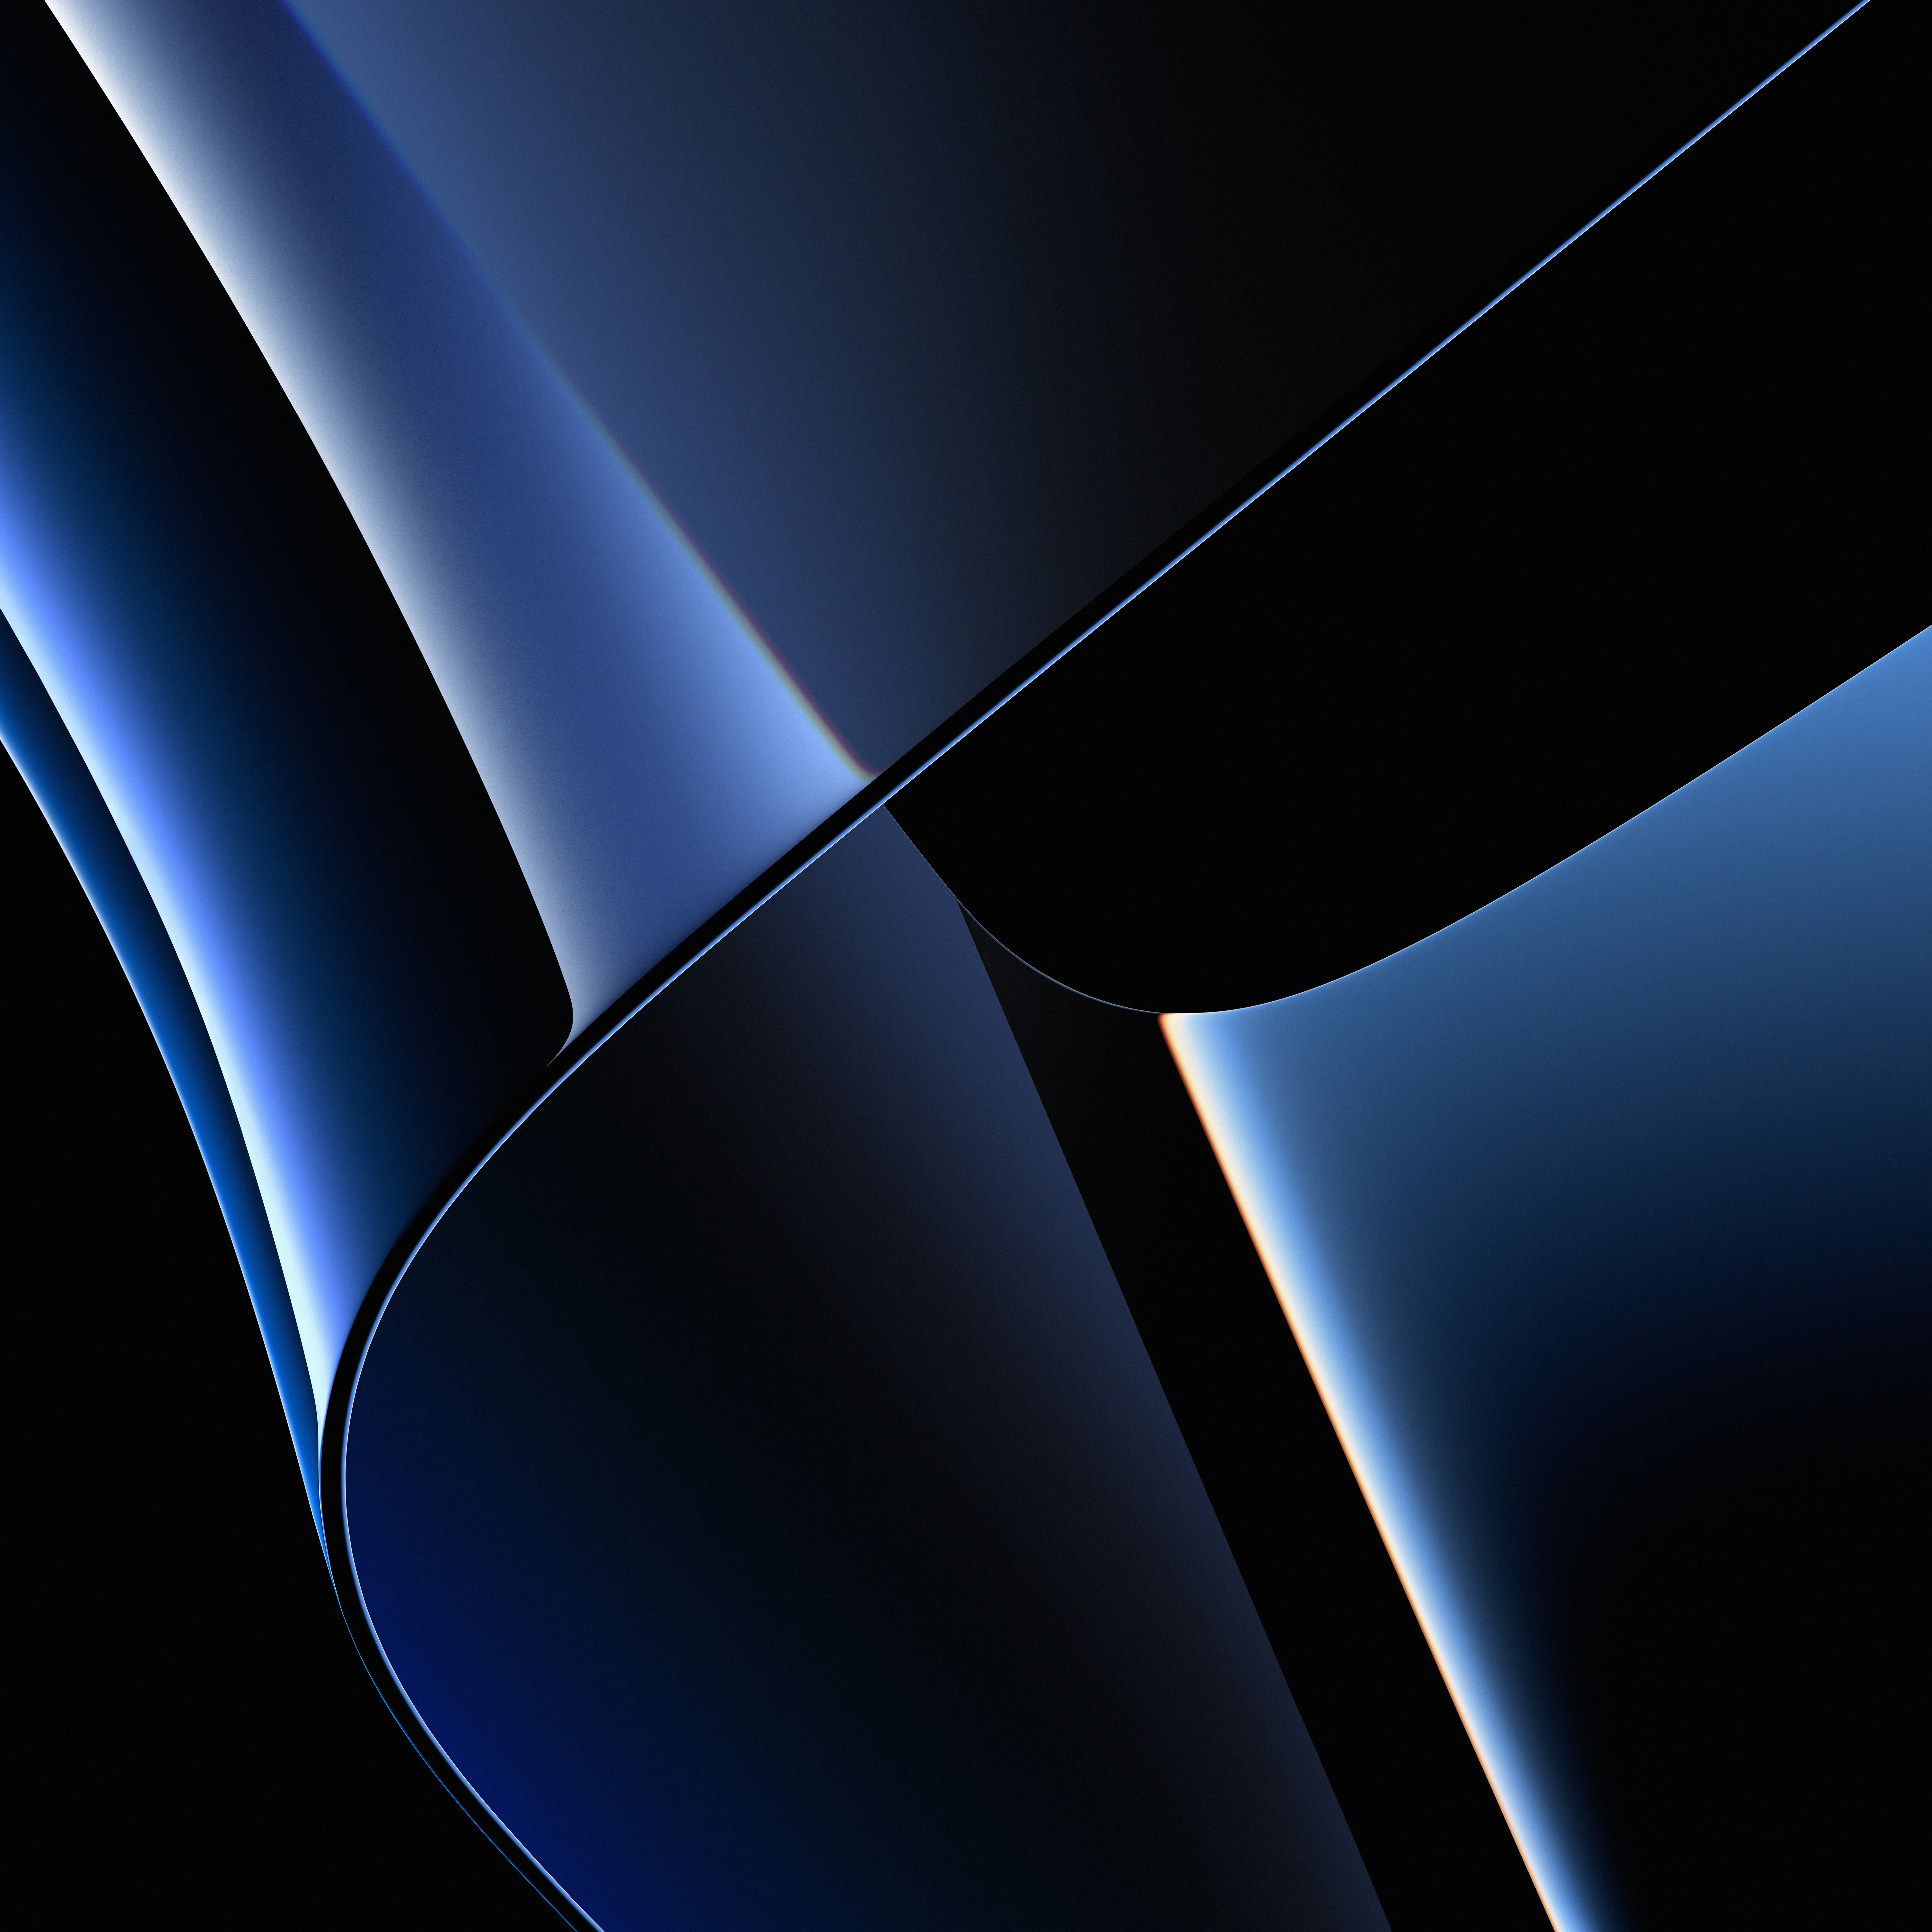 New 2021 MacBook Pro (Chroma-Blu Dark) Stock Wallpaper in Ultra HD -  Wallpapers Central